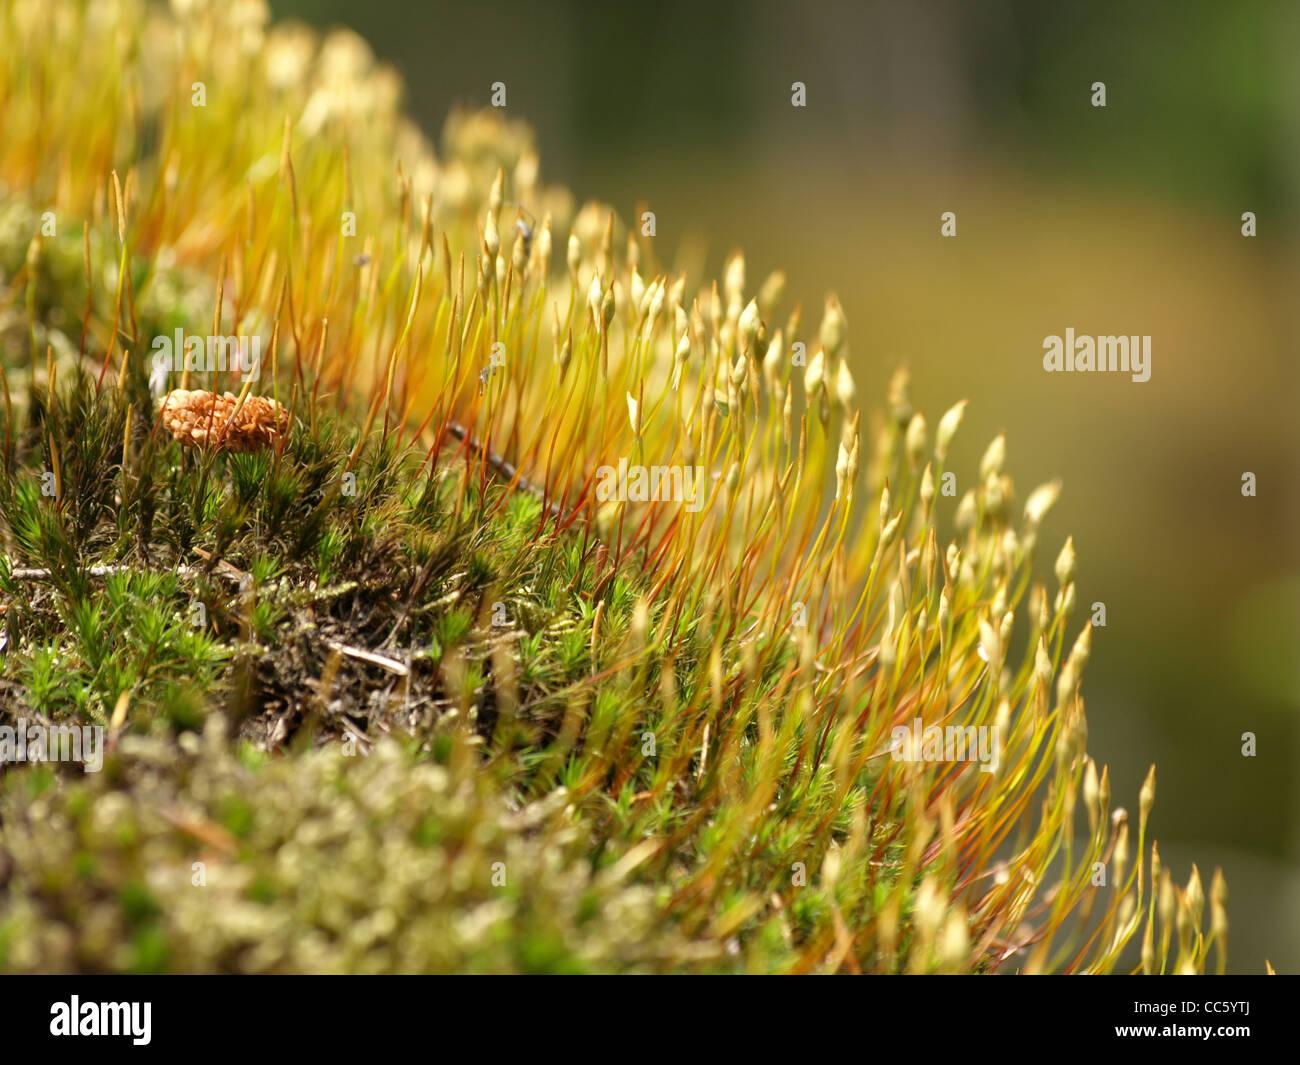 haircap-moss-hair-moss-star-moss-polytrichum-formosum-schnes-frauenhaarmoos-CC5YTJ.jpg